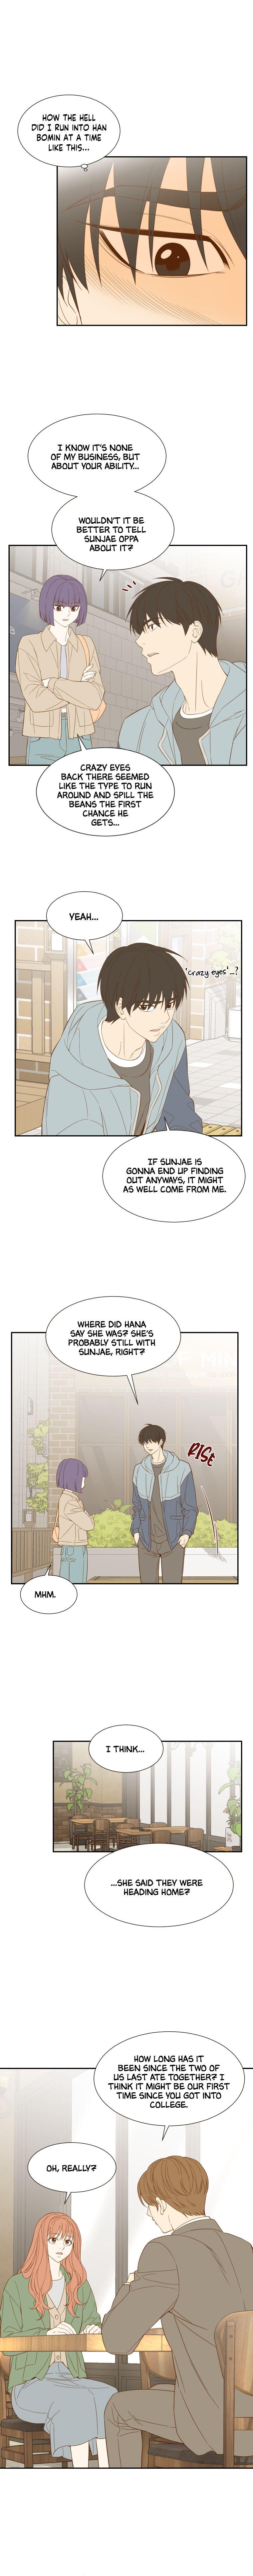 Hana’s Choice Chapter 22 - Page 3